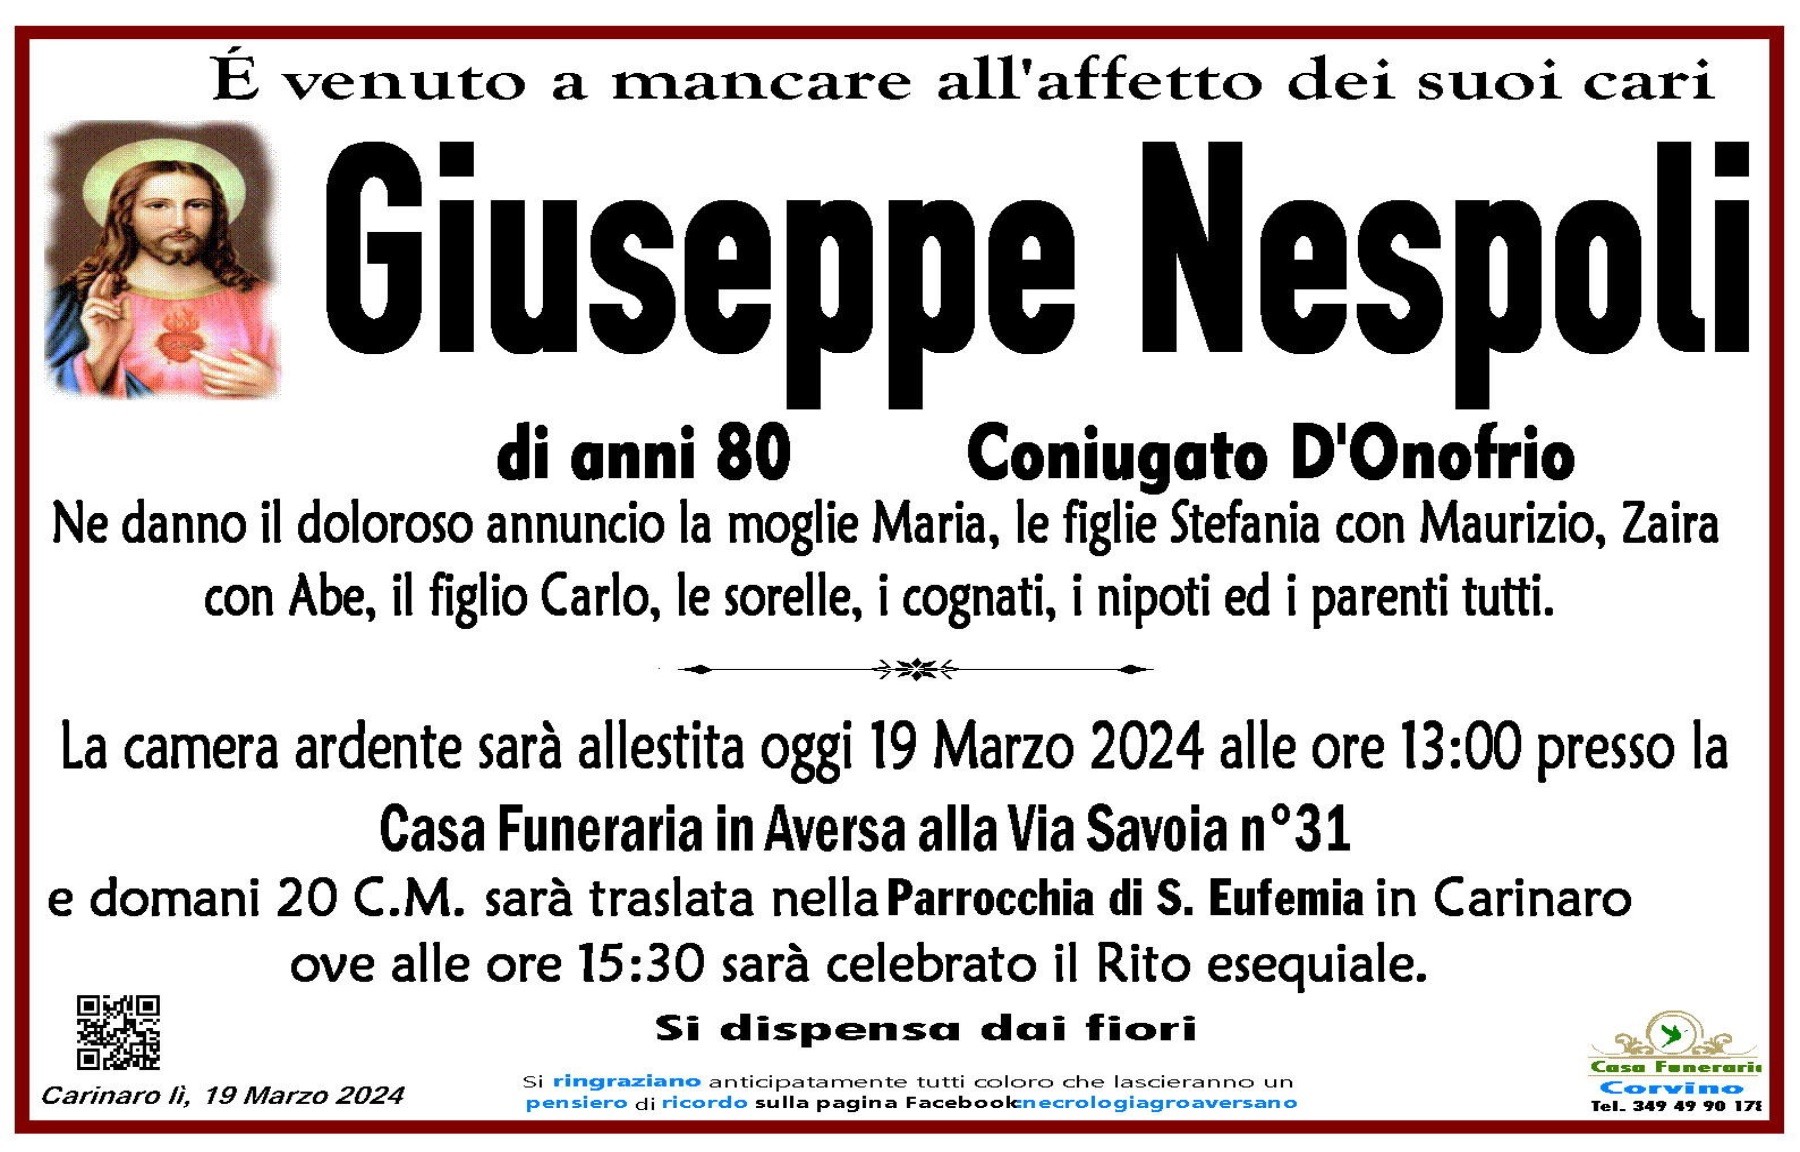 Giuseppe Nespoli